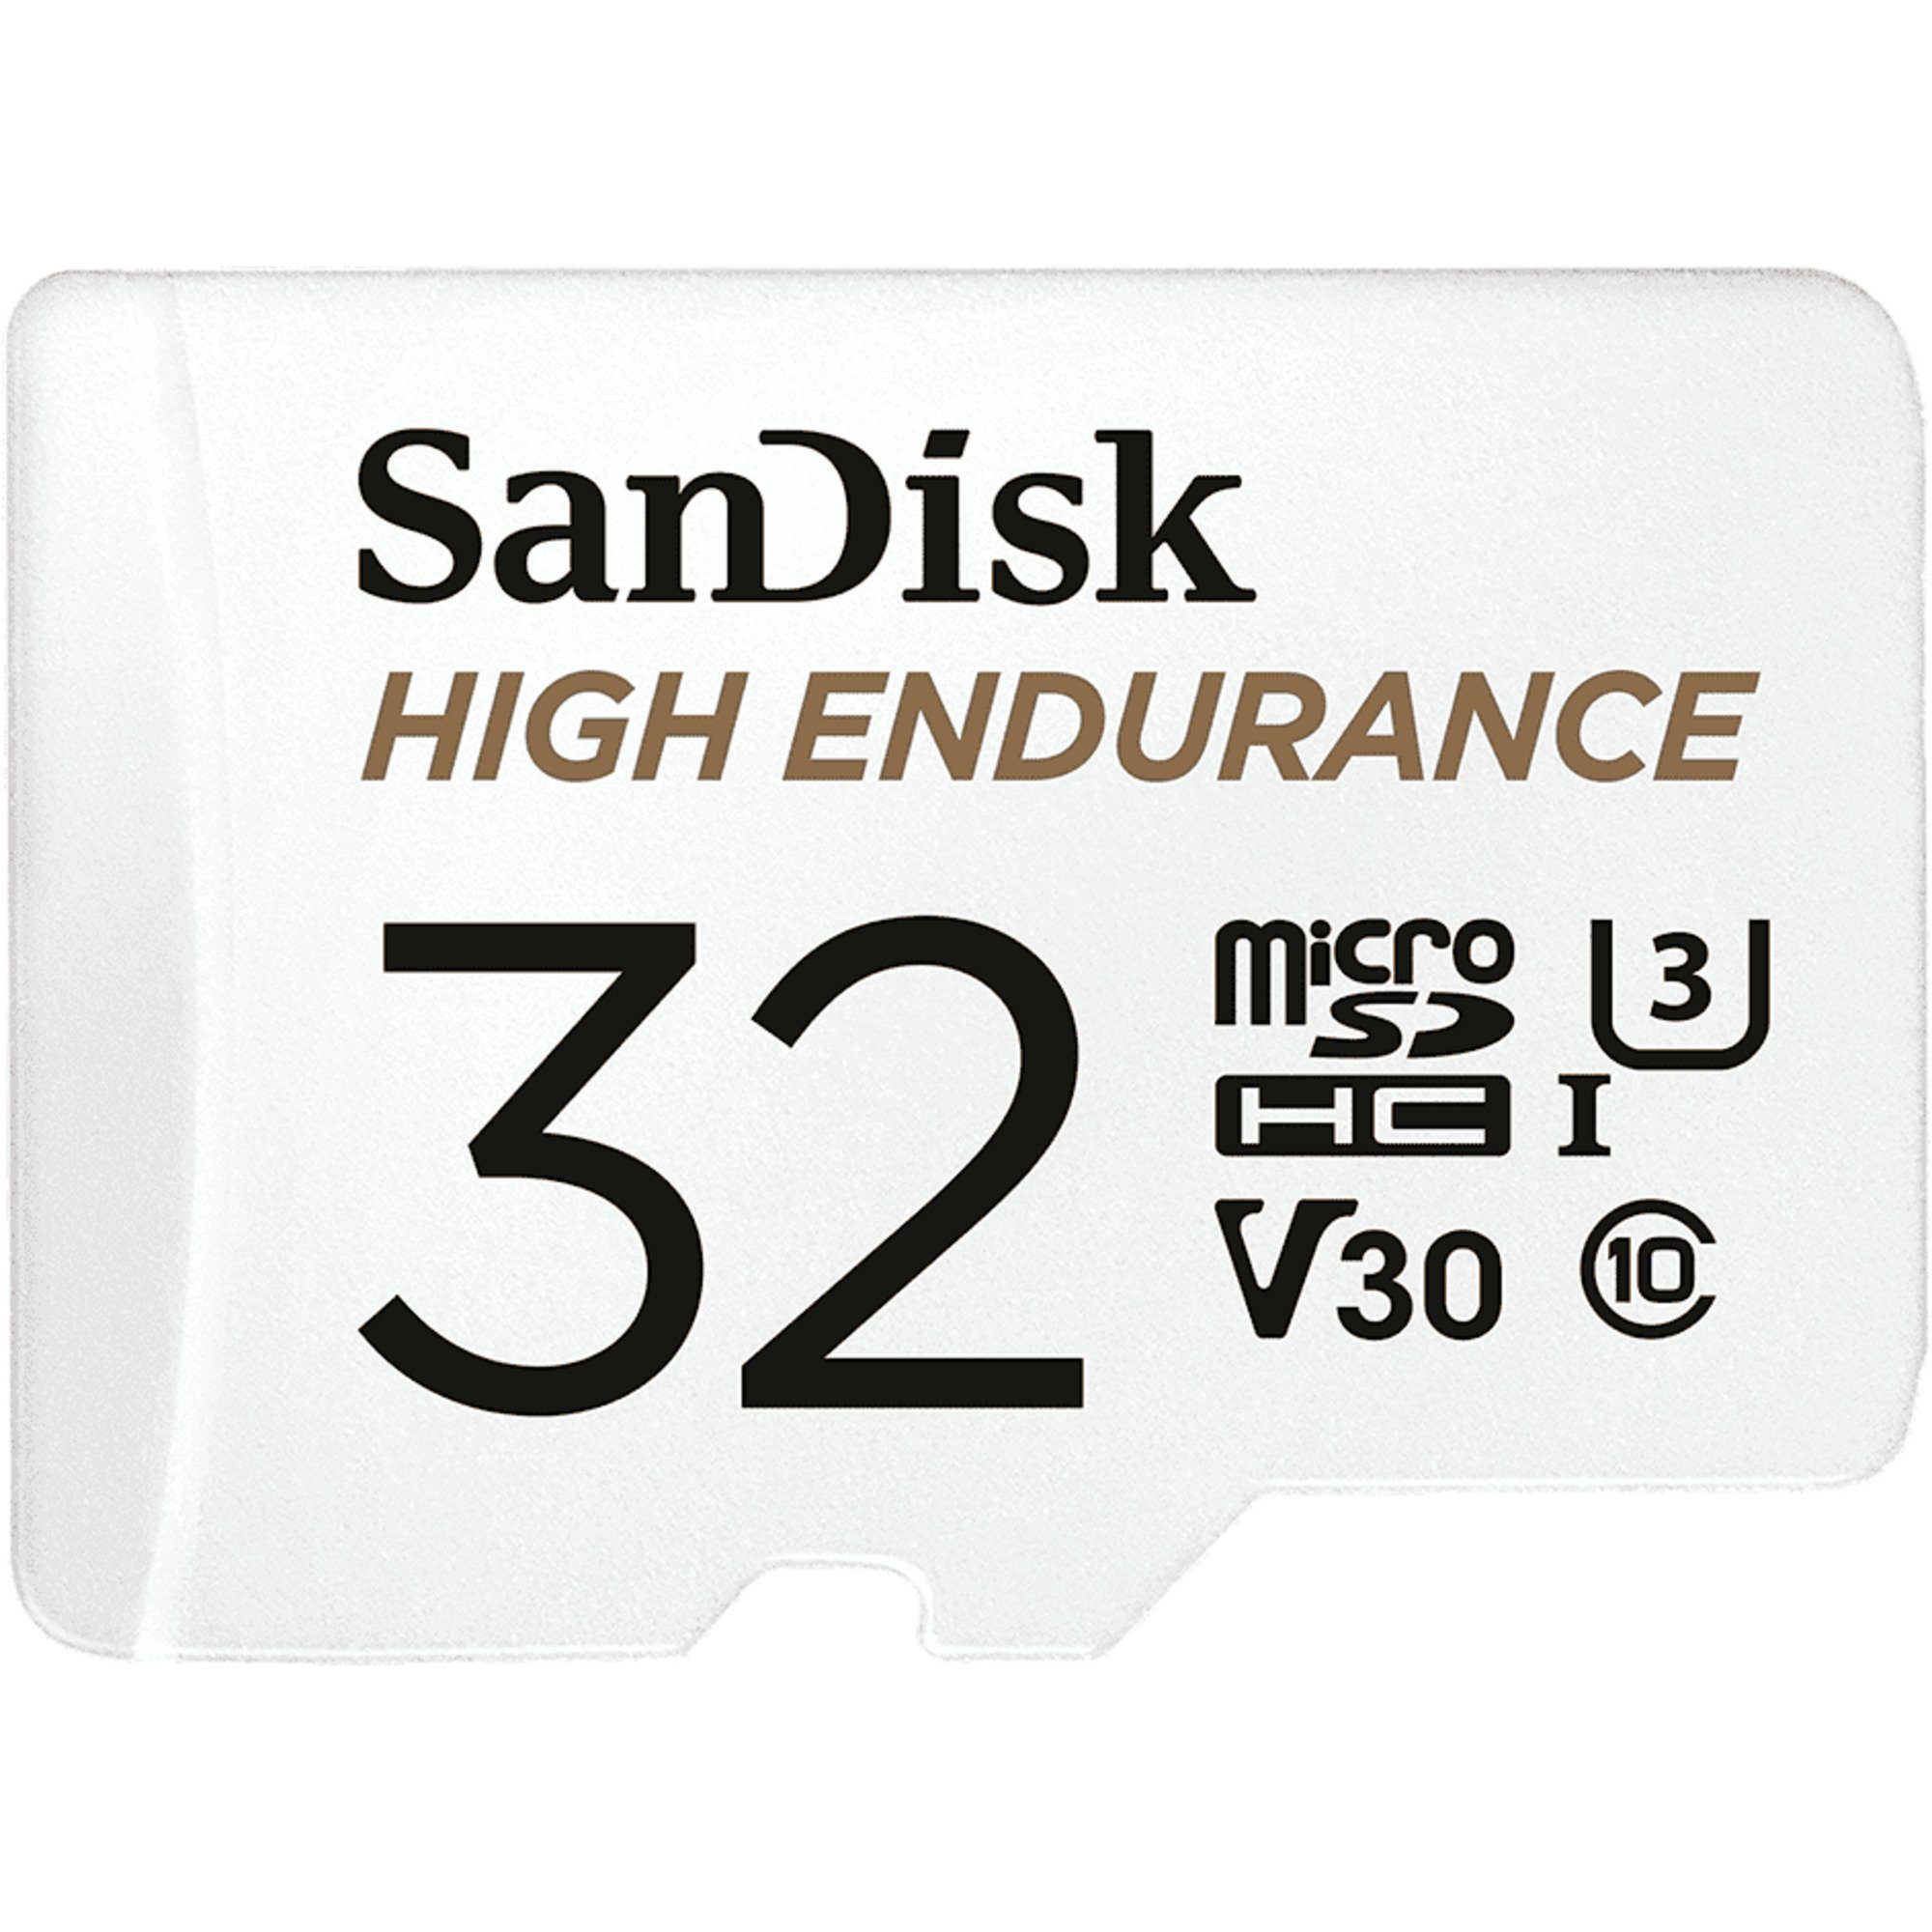 Sandisk High Endurance 32 GB microSDHC Speicherkarte (32 GB GB)